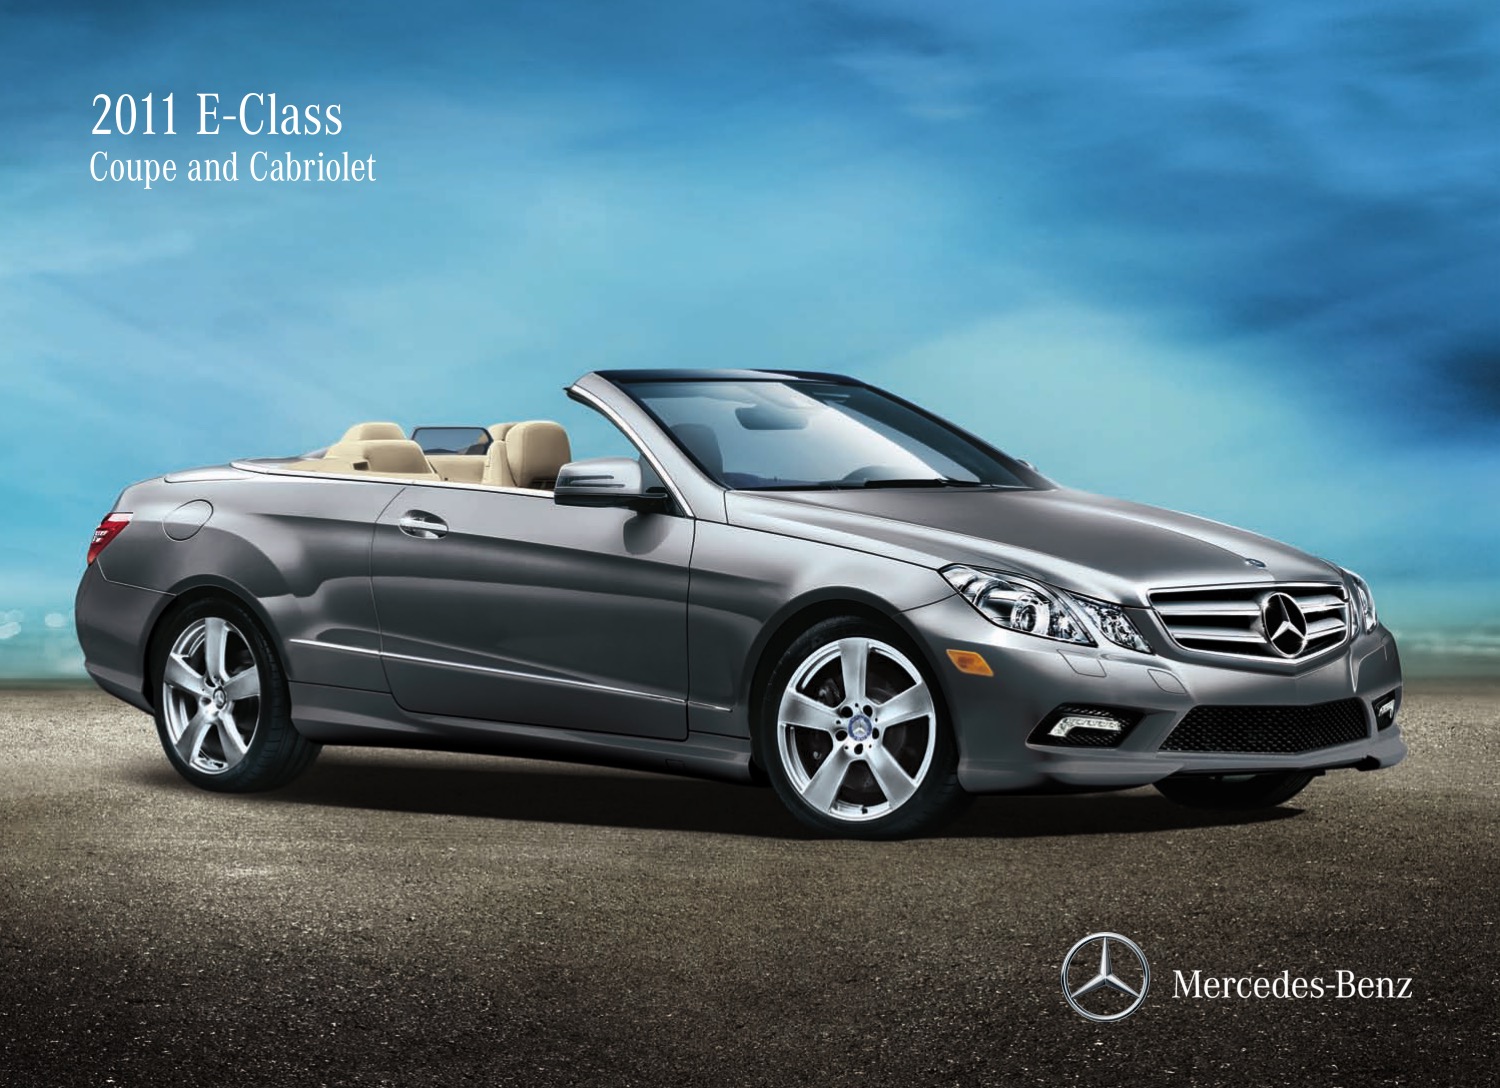 2011 Mercedes-Benz E-Class Coupe Convertible Brochure Page 9